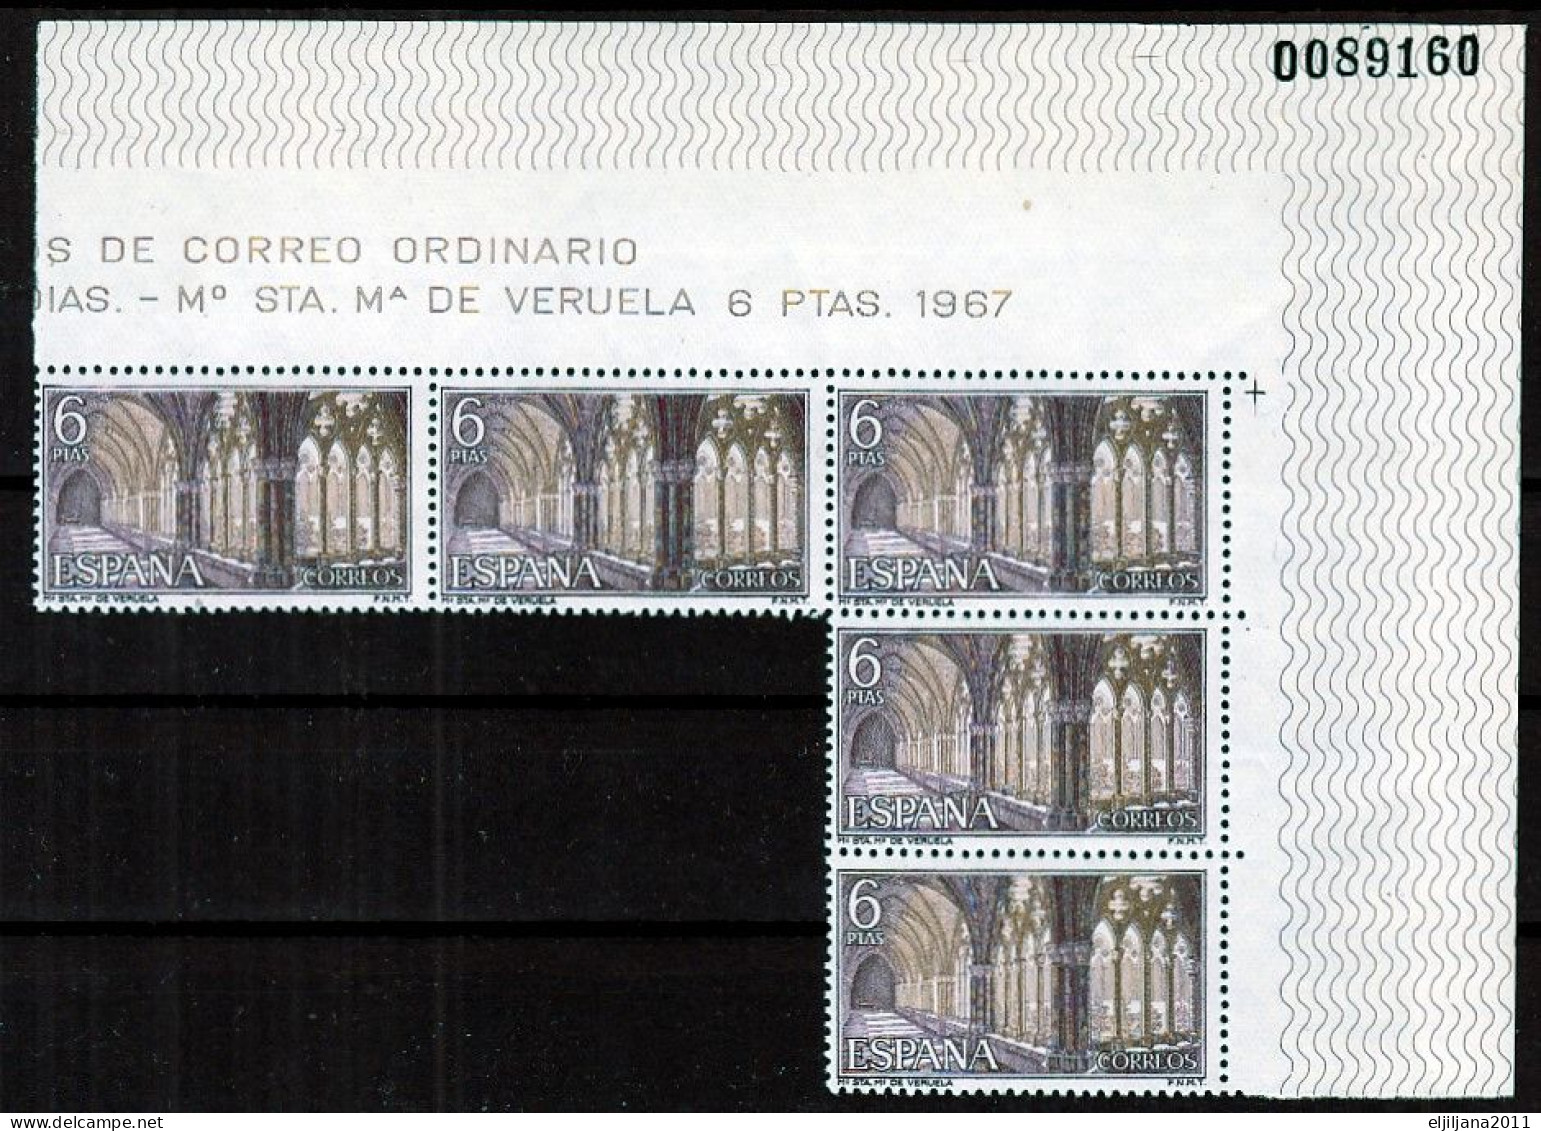 ⁕ SPAIN / ESPANA 1967 ⁕ Monasteries And Abbeys Mi.1728 - 1730 X 5 ⁕ MNH - See Scan - Nuovi